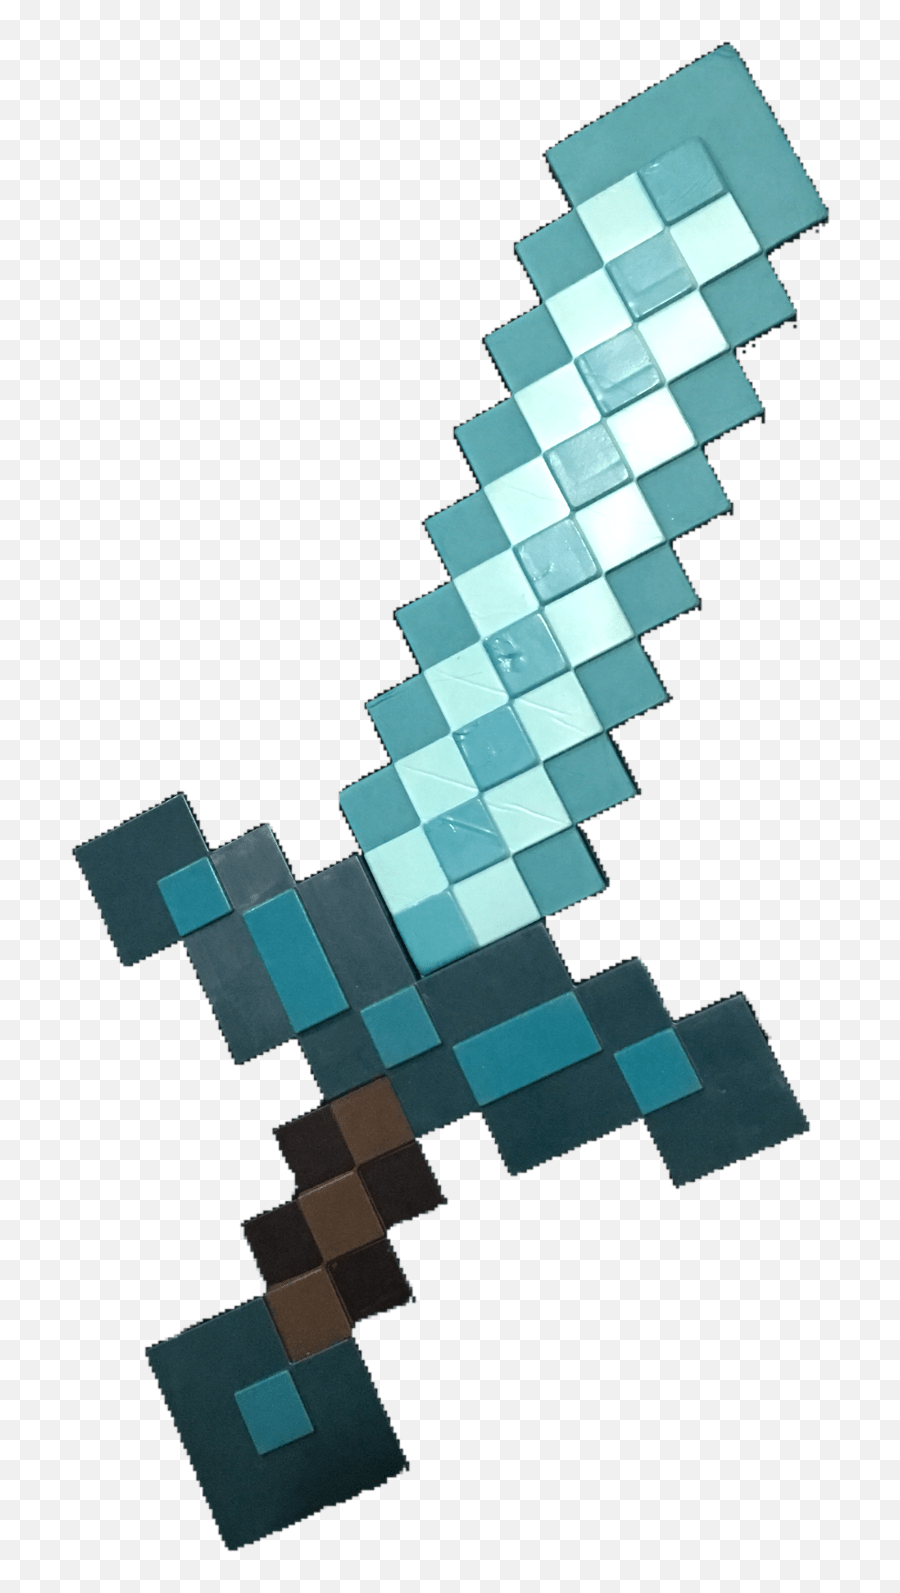 Minecraft Sword - Epic Photobooth Perth Make A Minecraft Diamond Sword Emoji,Minecraft Sword Png